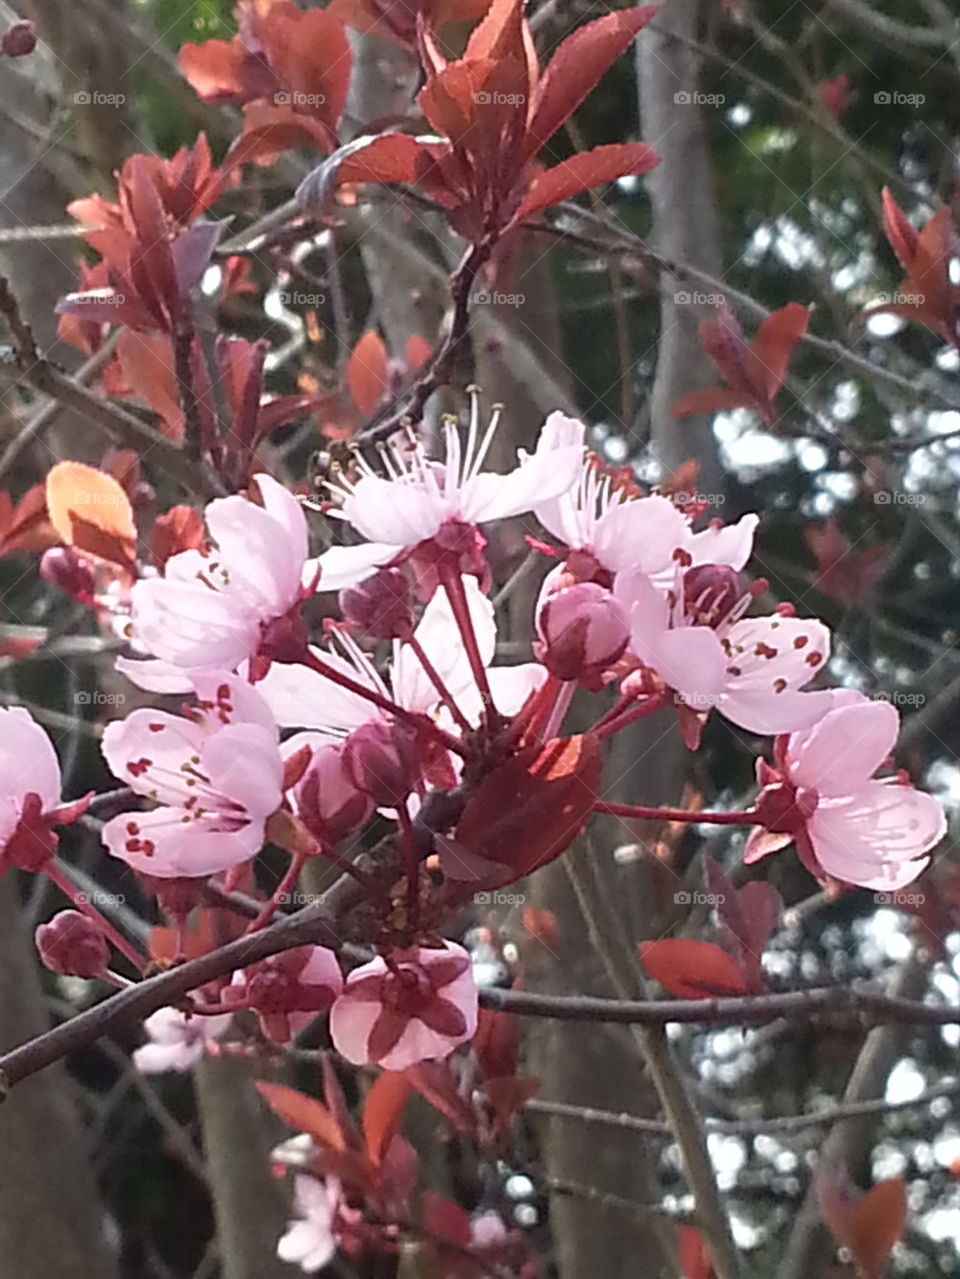 tree blossoms